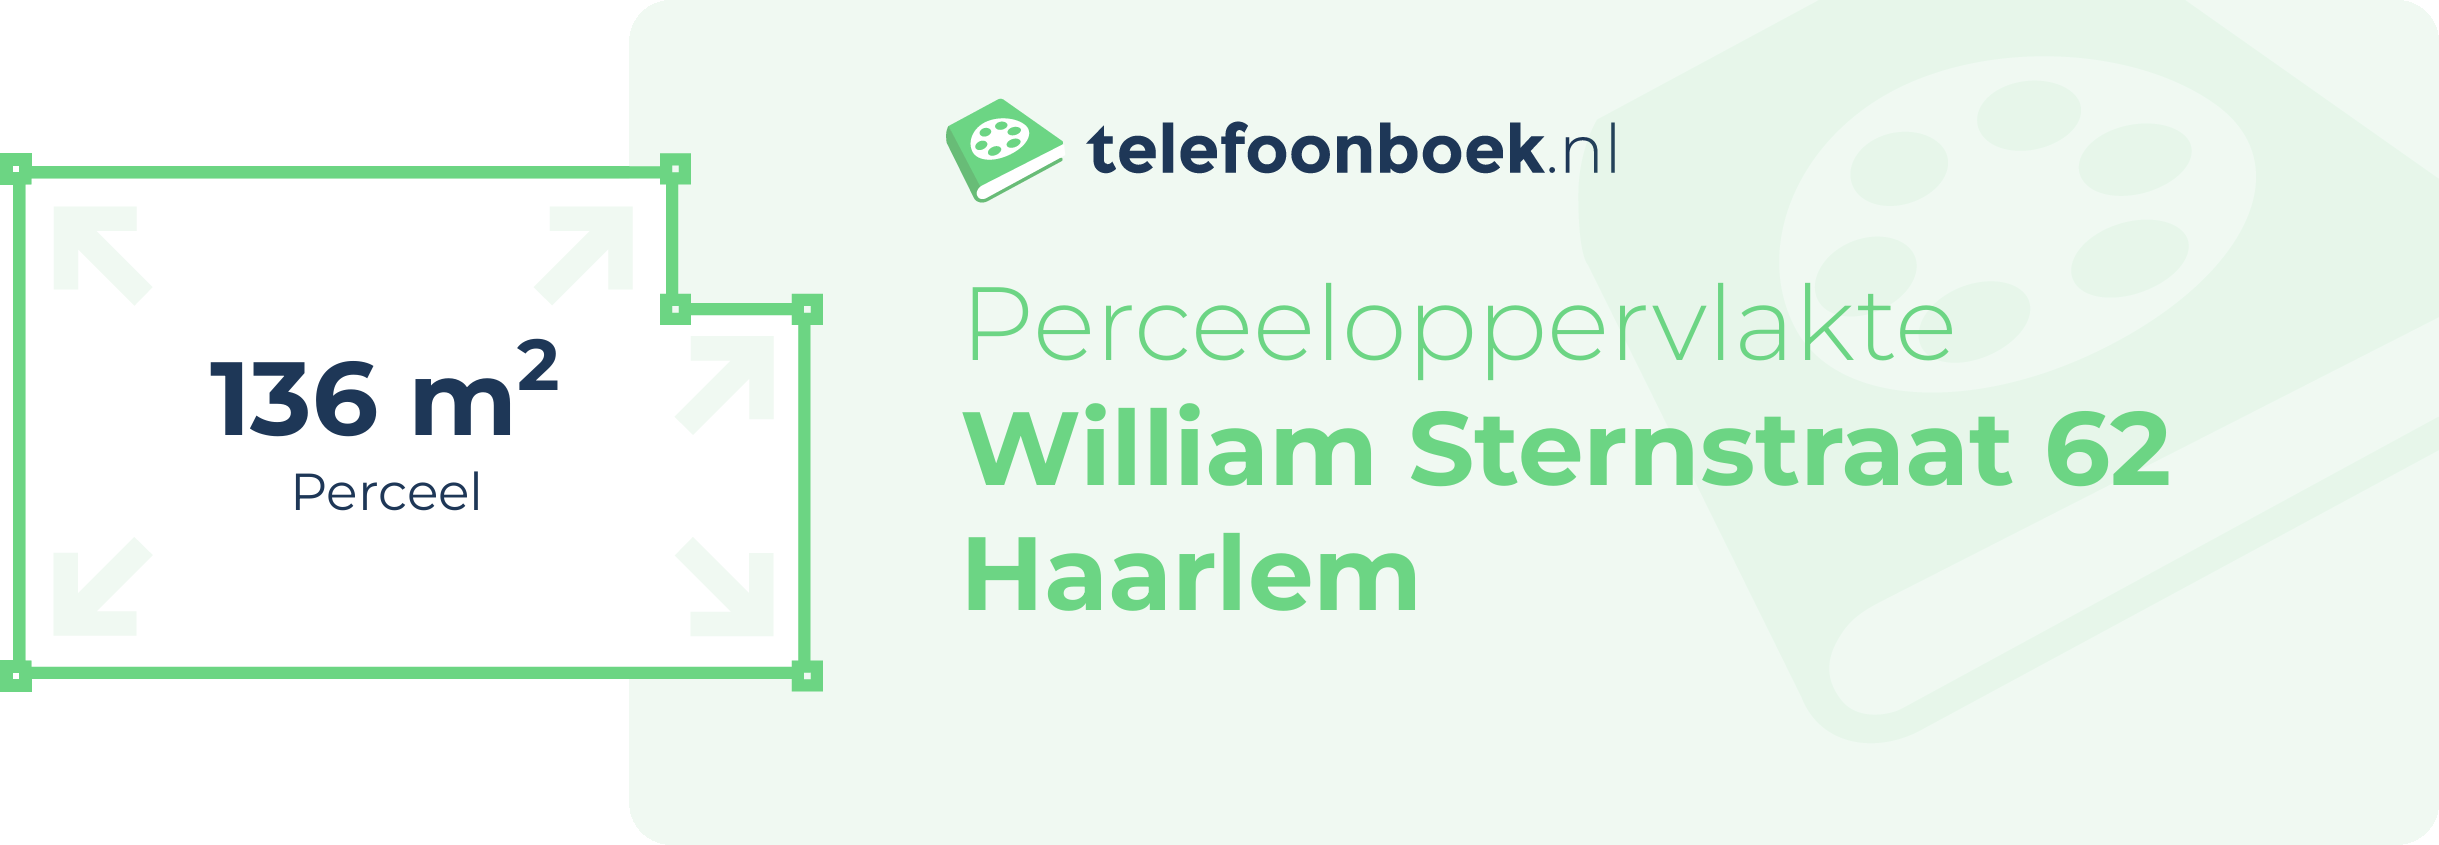 Perceeloppervlakte William Sternstraat 62 Haarlem